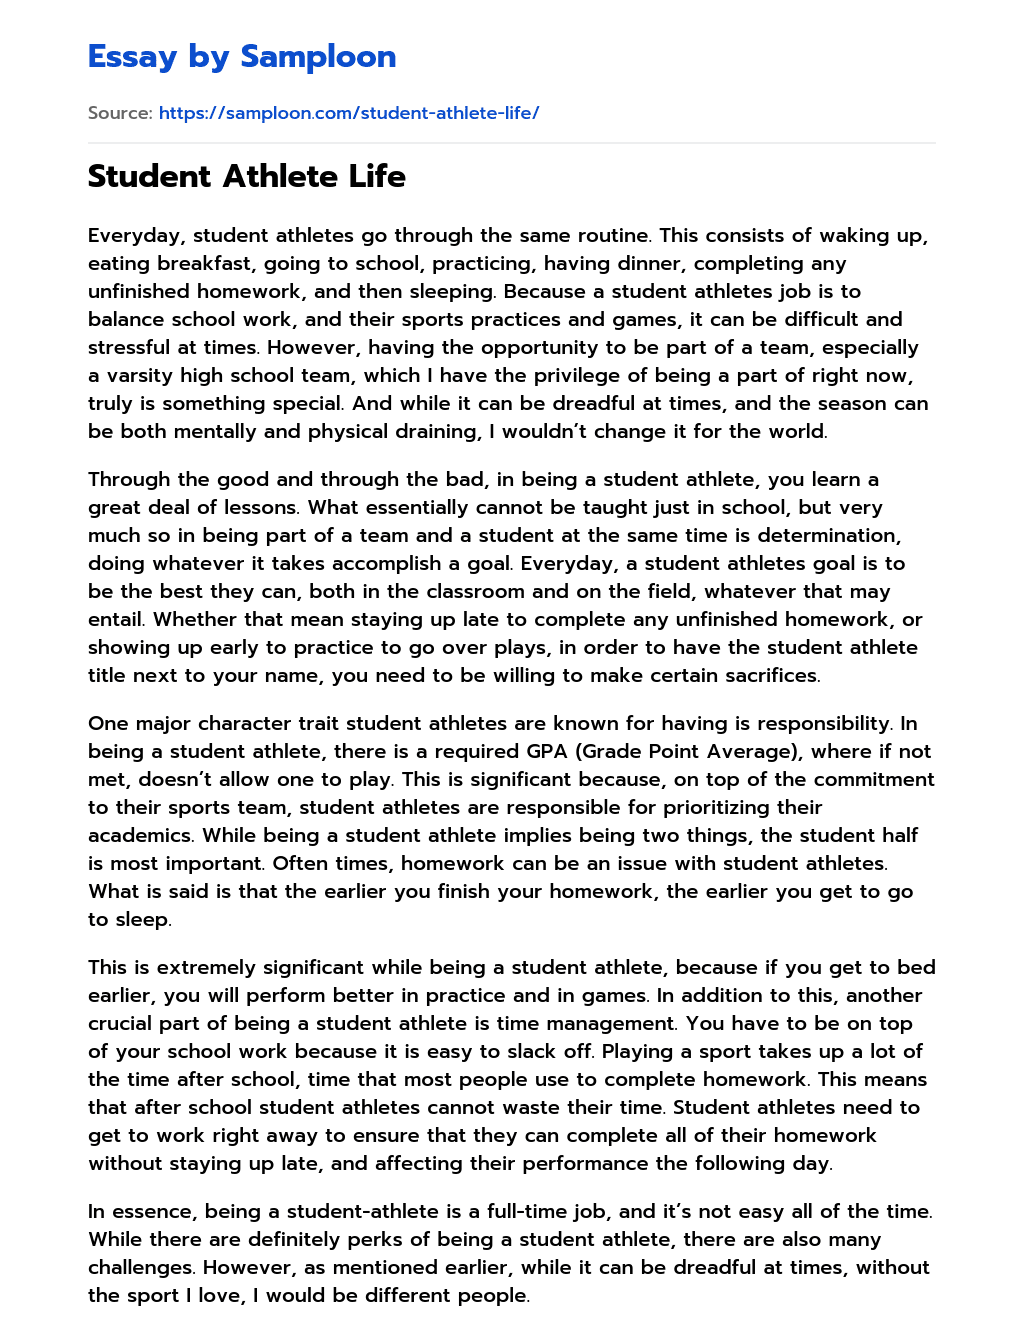 Student Athlete Life essay